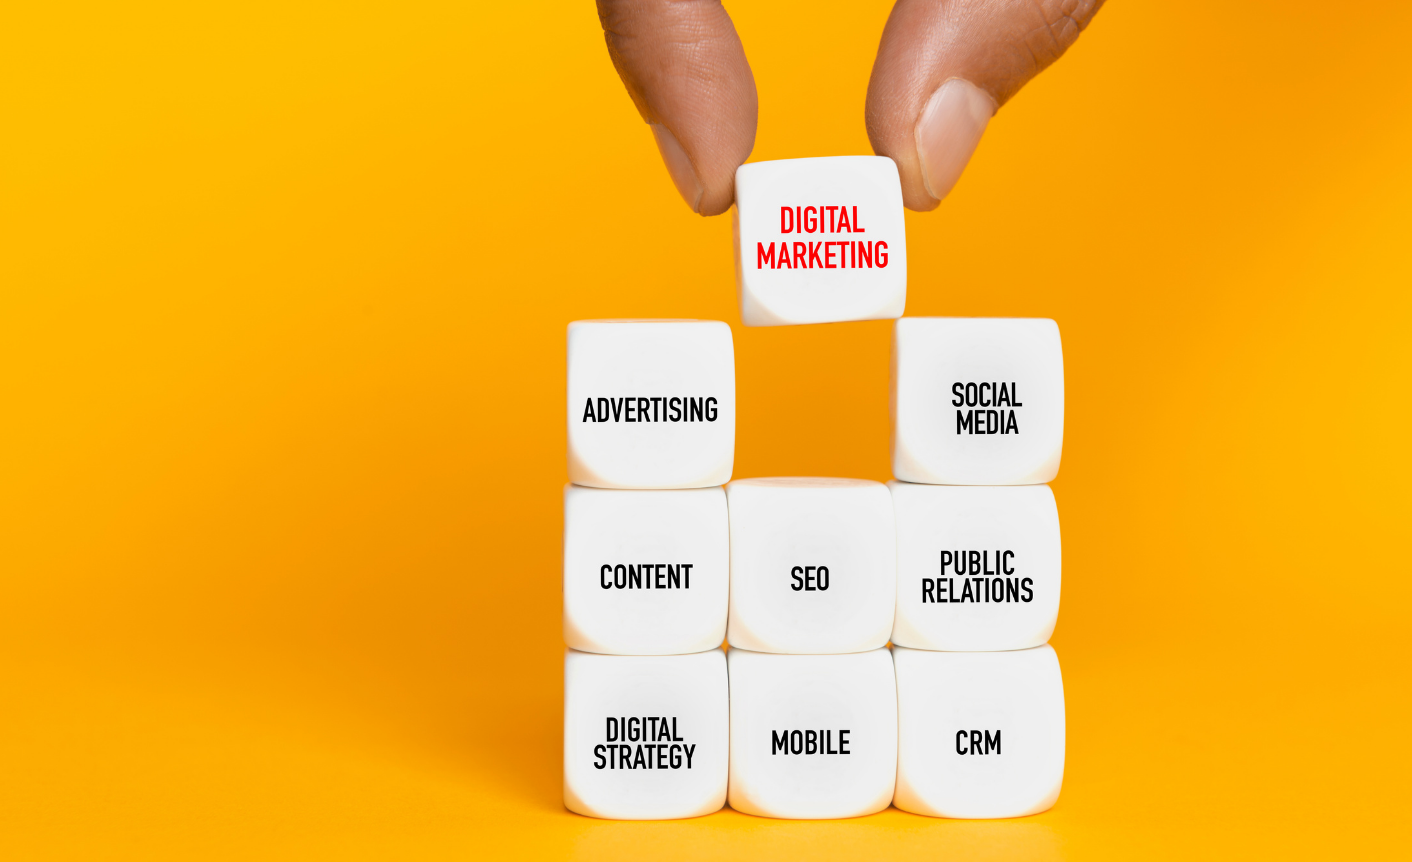 Digital marketing strategy blog post image